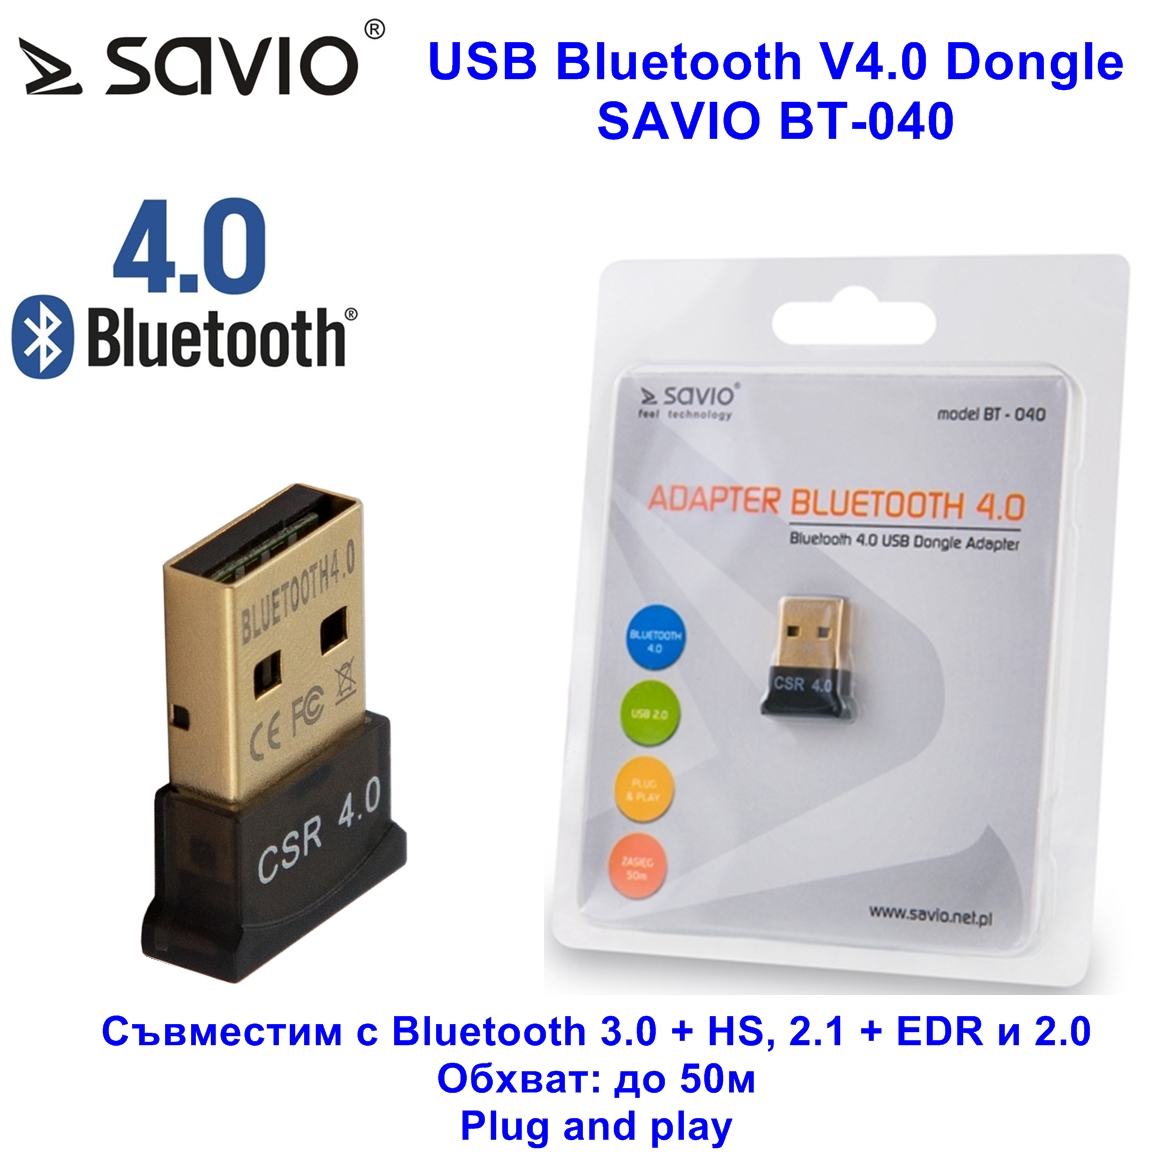 USB Bluetooth V4.0 Dongle SAVIO BT-040